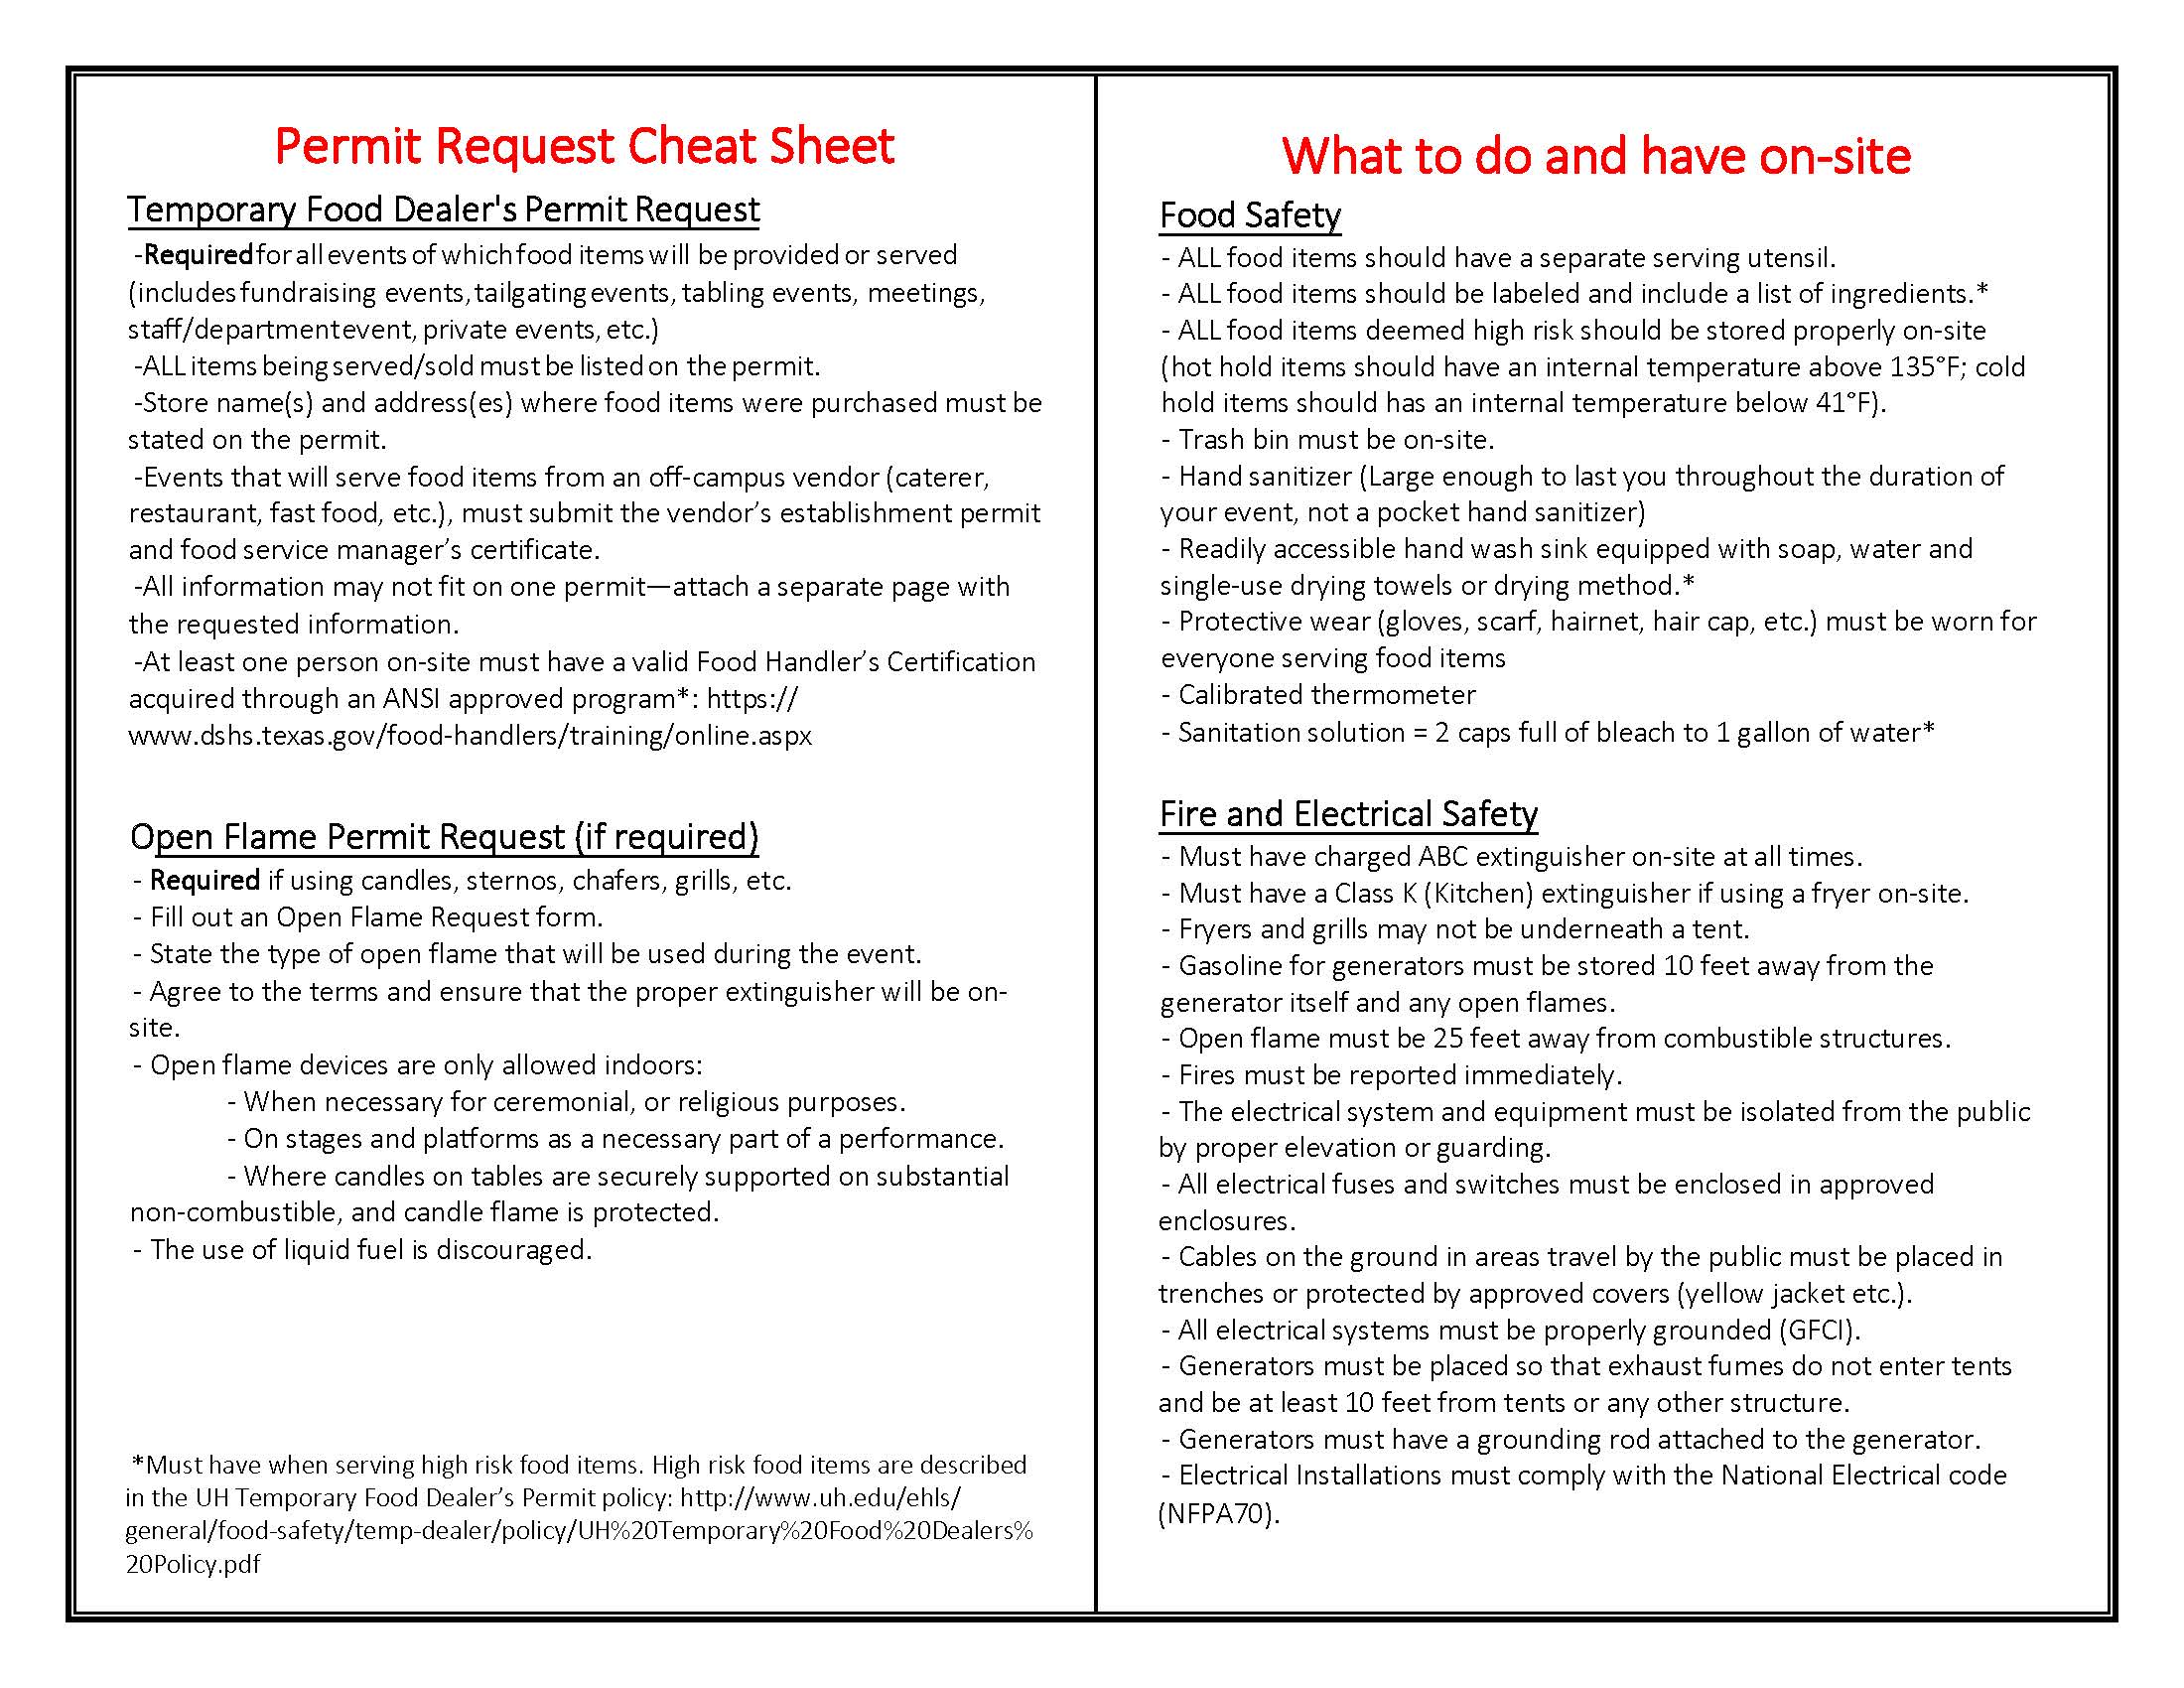 food-permit-cheat-sheet.jpg